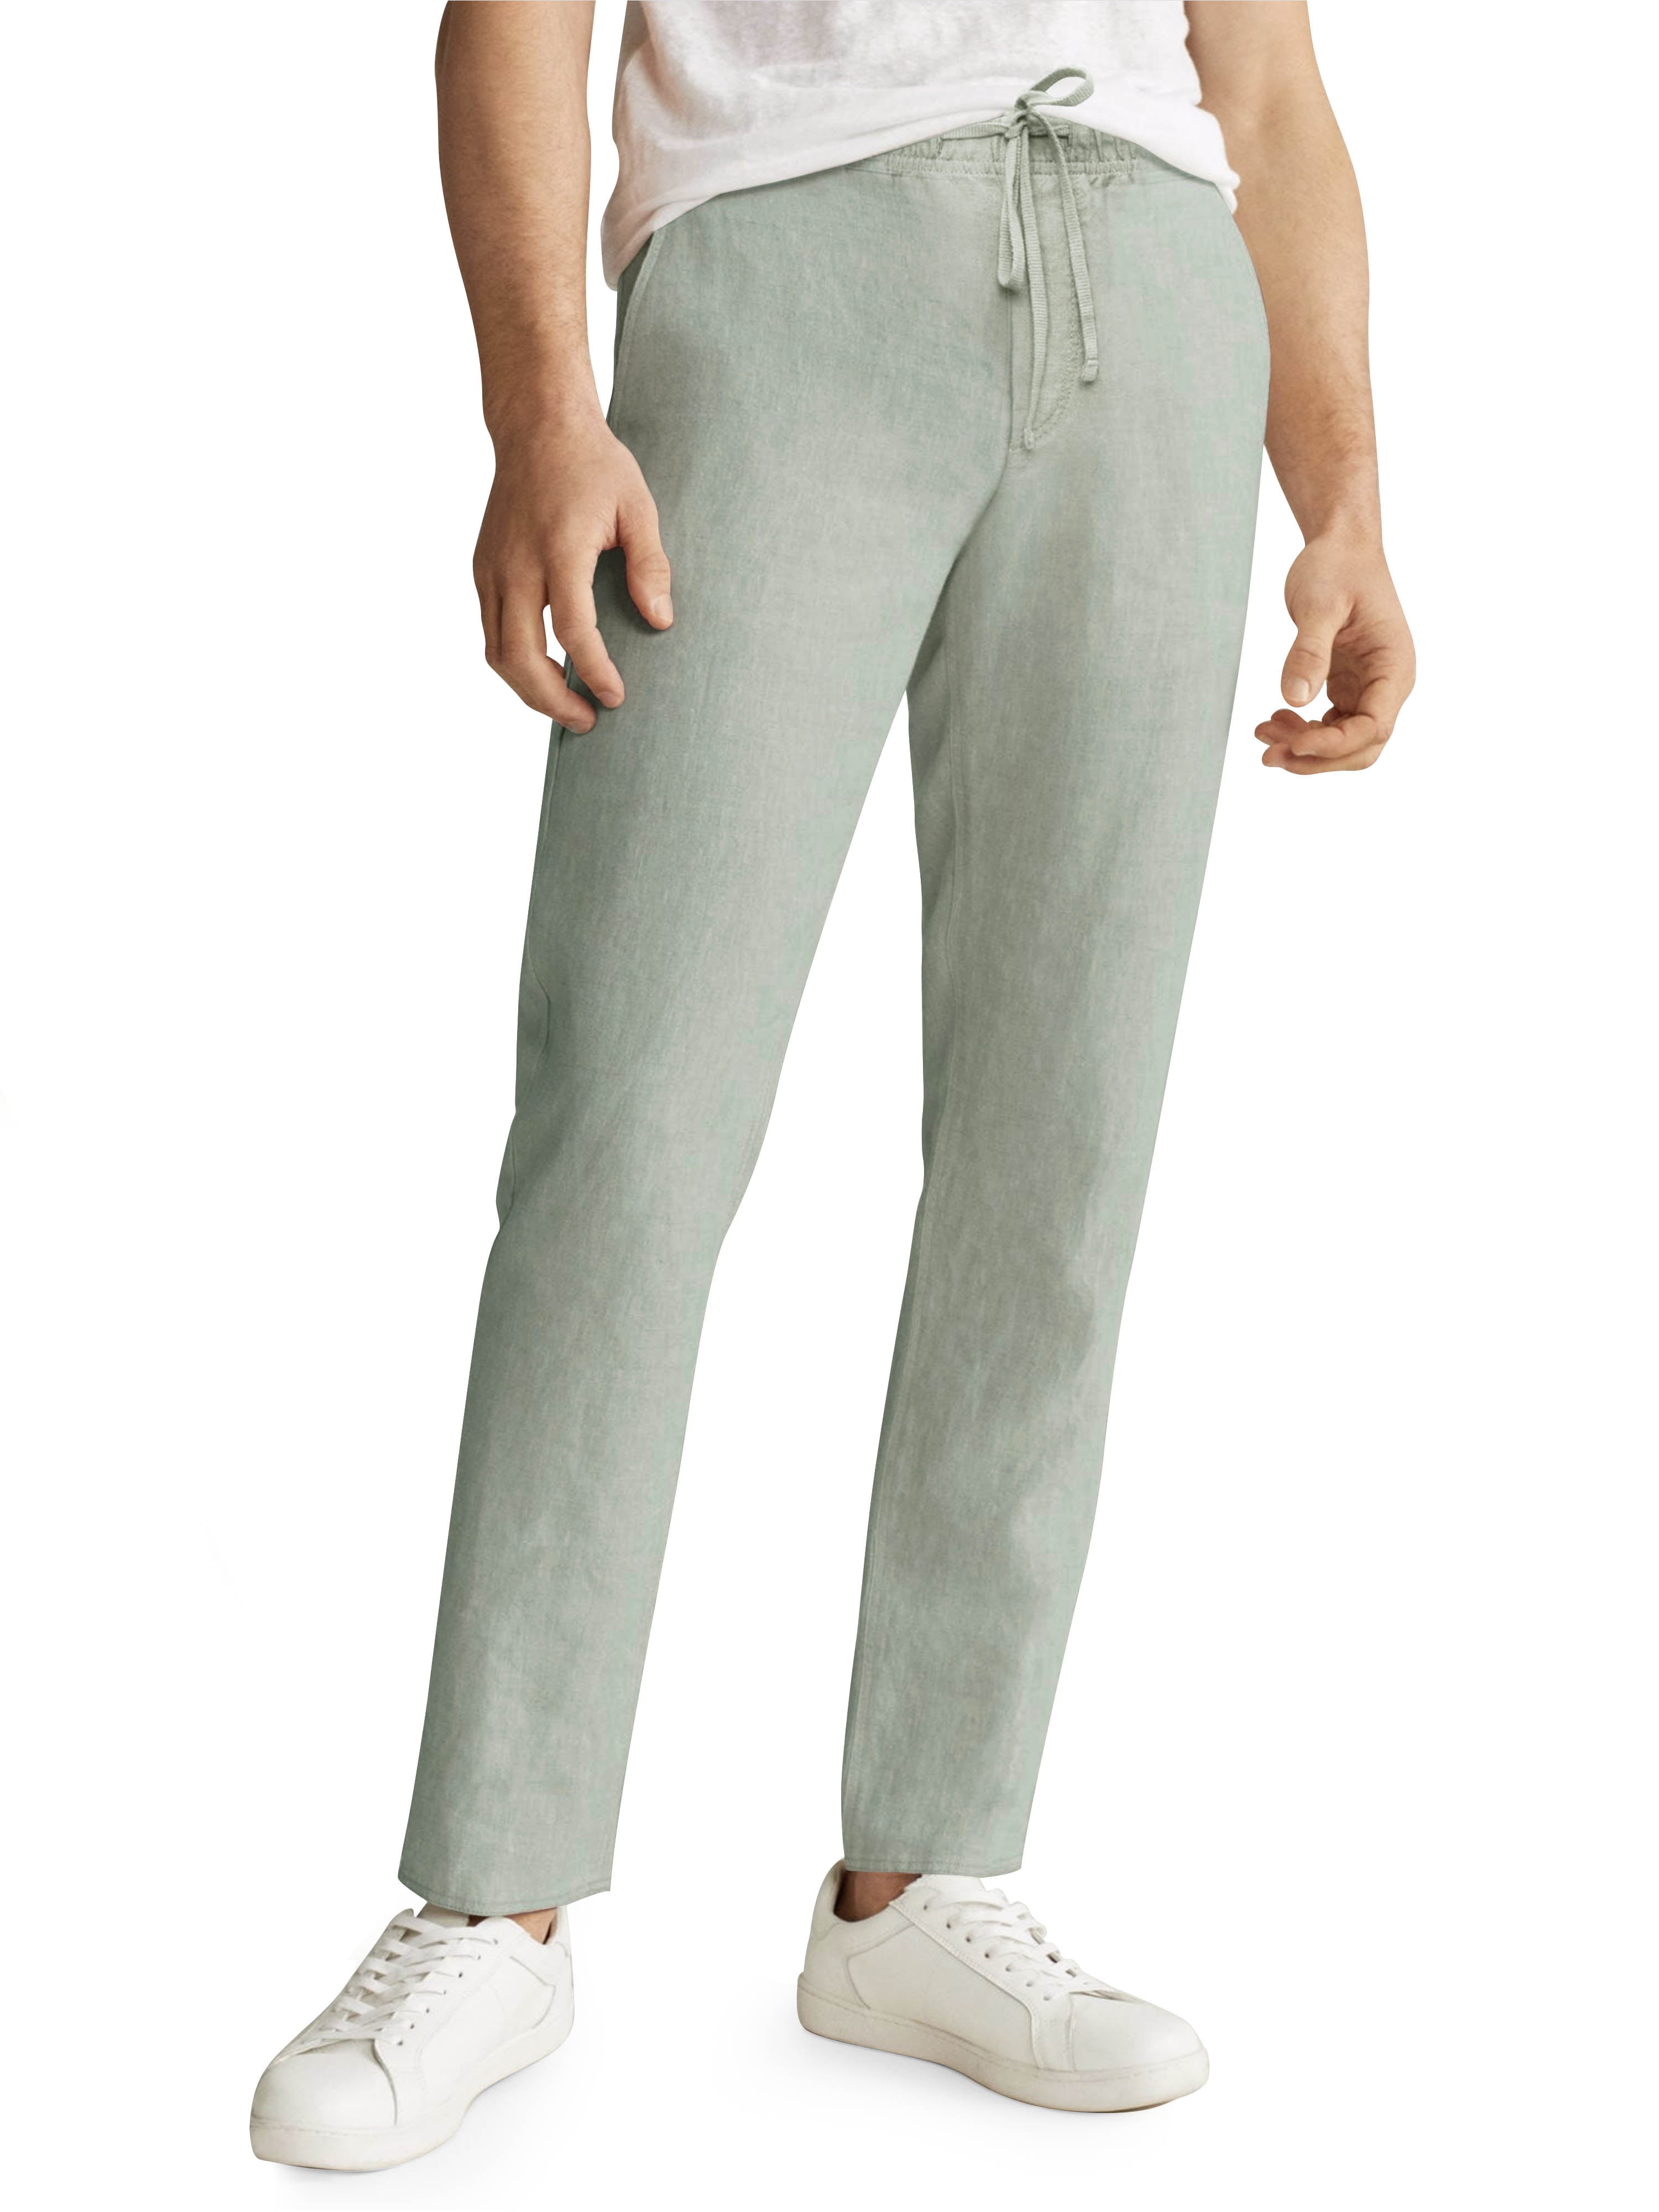 Hat and Beyond Mens Premium Soft Linen Pants Wrinkle Resistant Flat Front Classic Slacks 